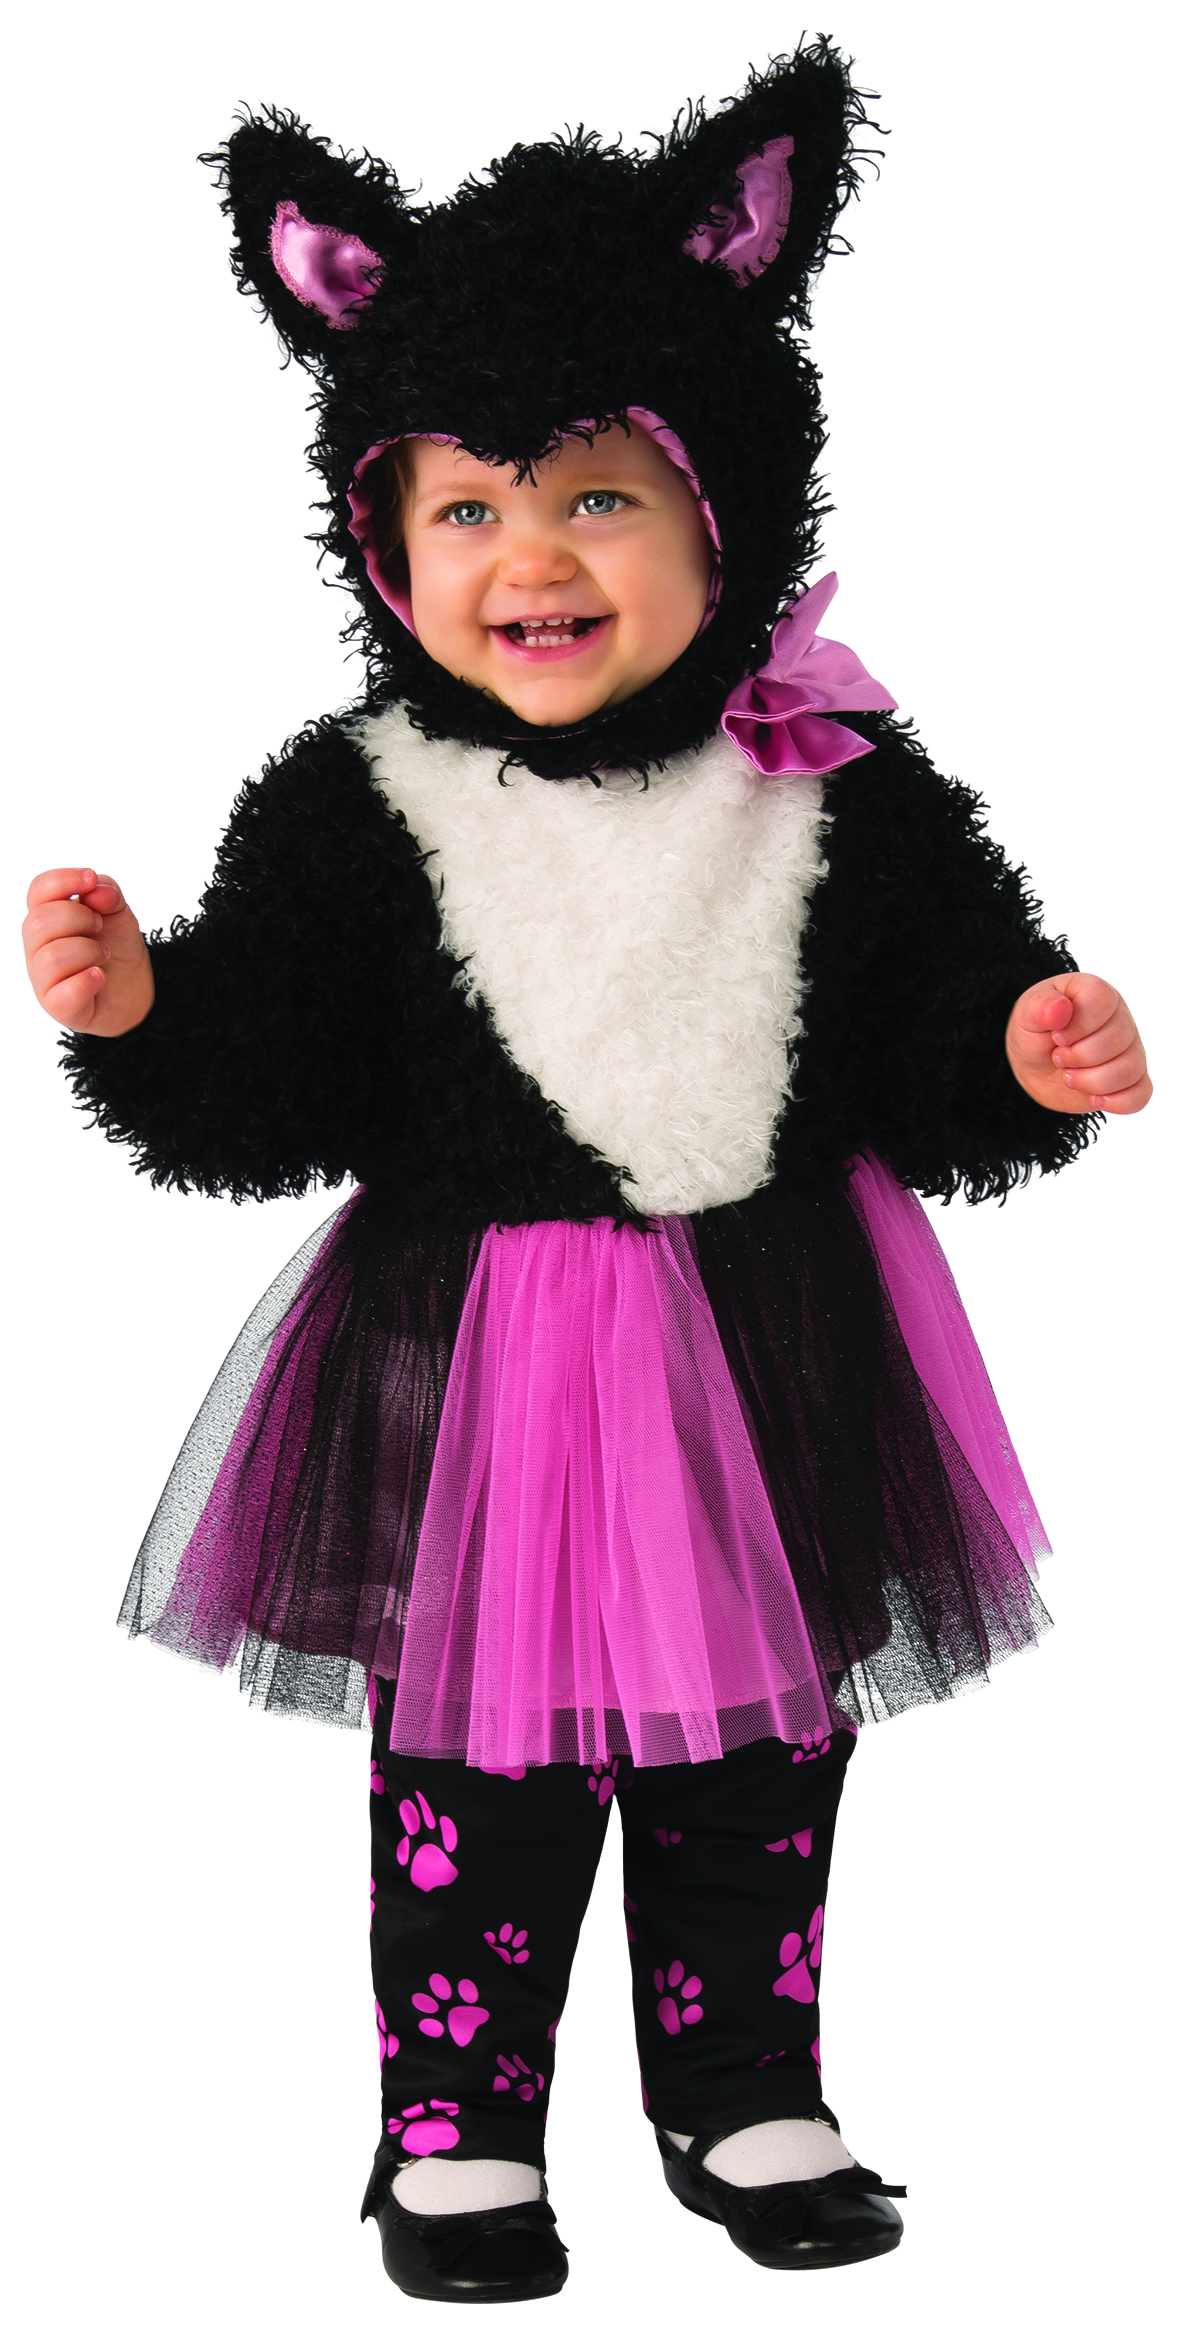 PxP 2300720 - Little Kitty, Kleinkind Kostüm Gr. 6 - 24 Monate, Baby Katze